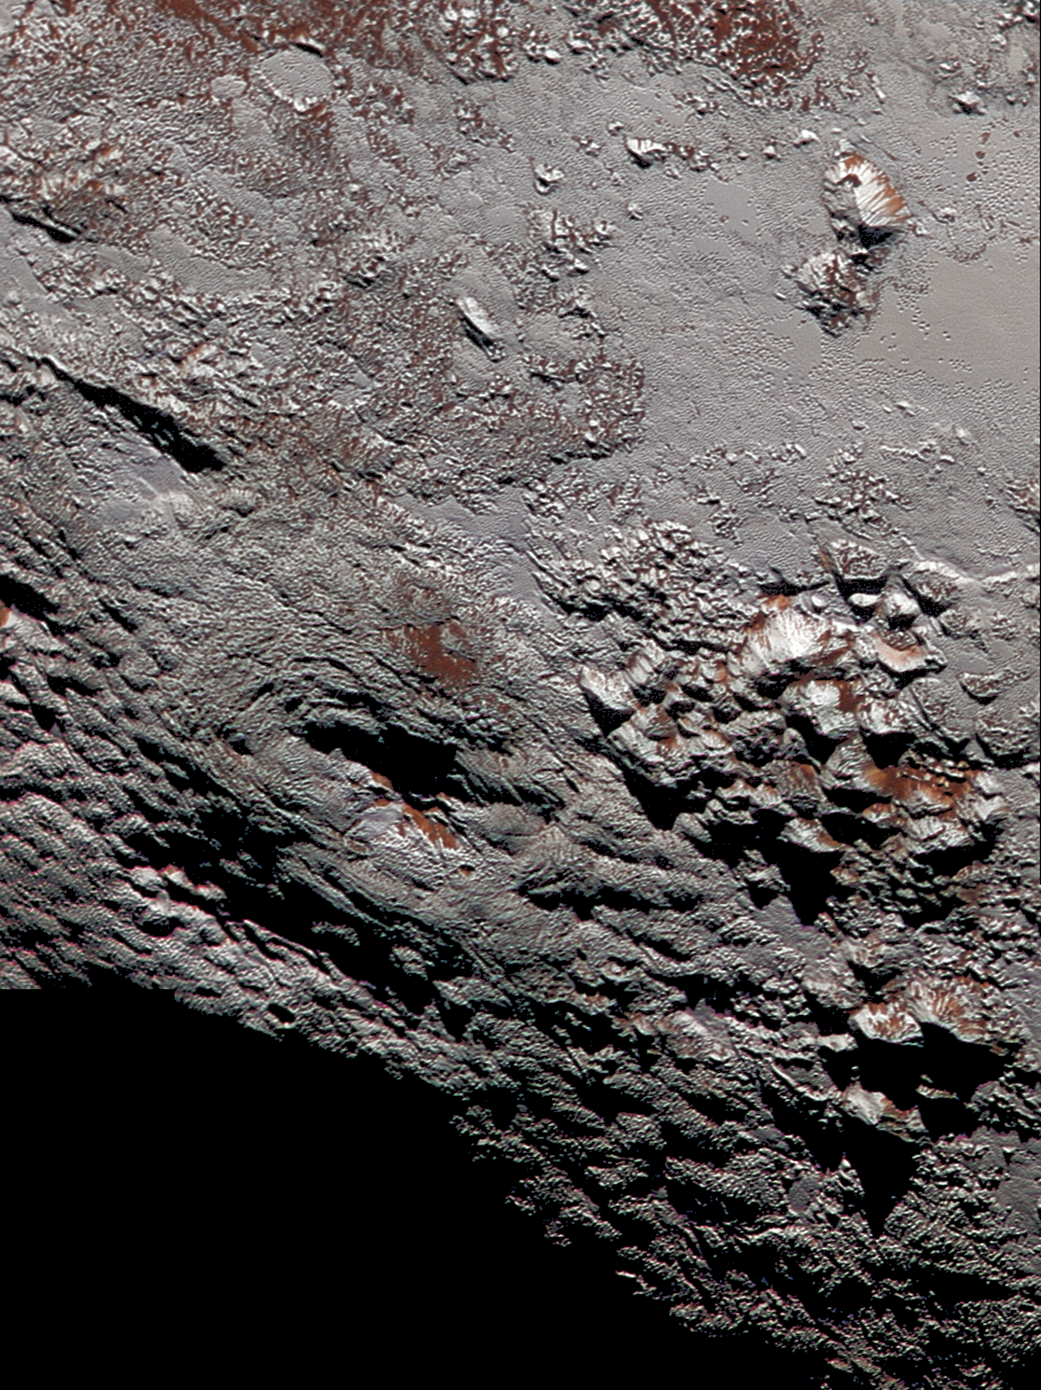 Image of possible cryovolcano on Pluto